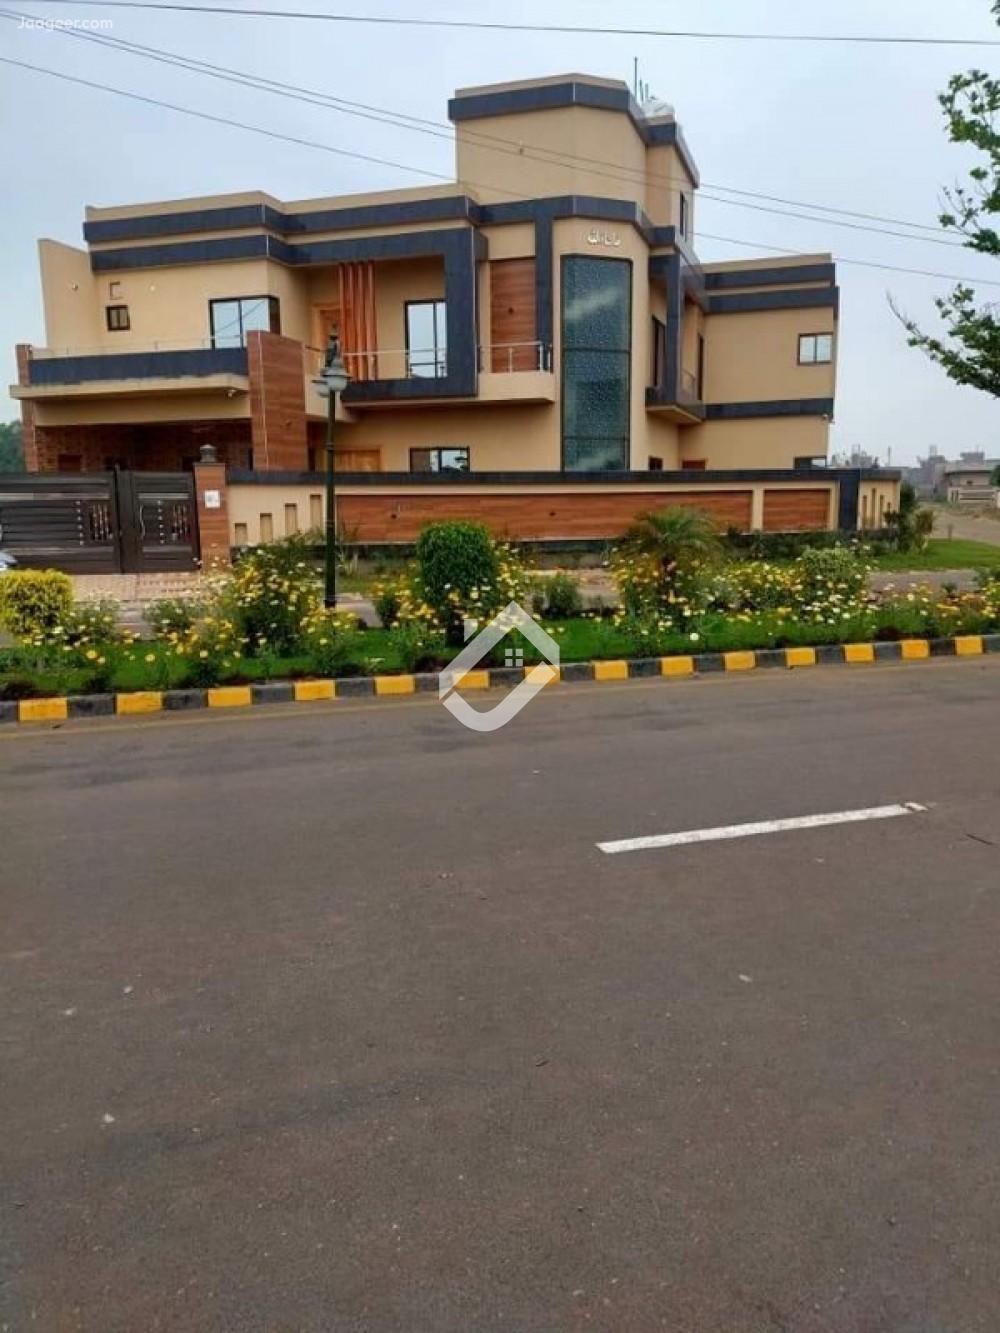 Main image 5 Marla Residential Plot For Sale In Shadman Enclave Near Faizpur Interchange Block_A Shadman Enclave Housing Scheme, Lahore